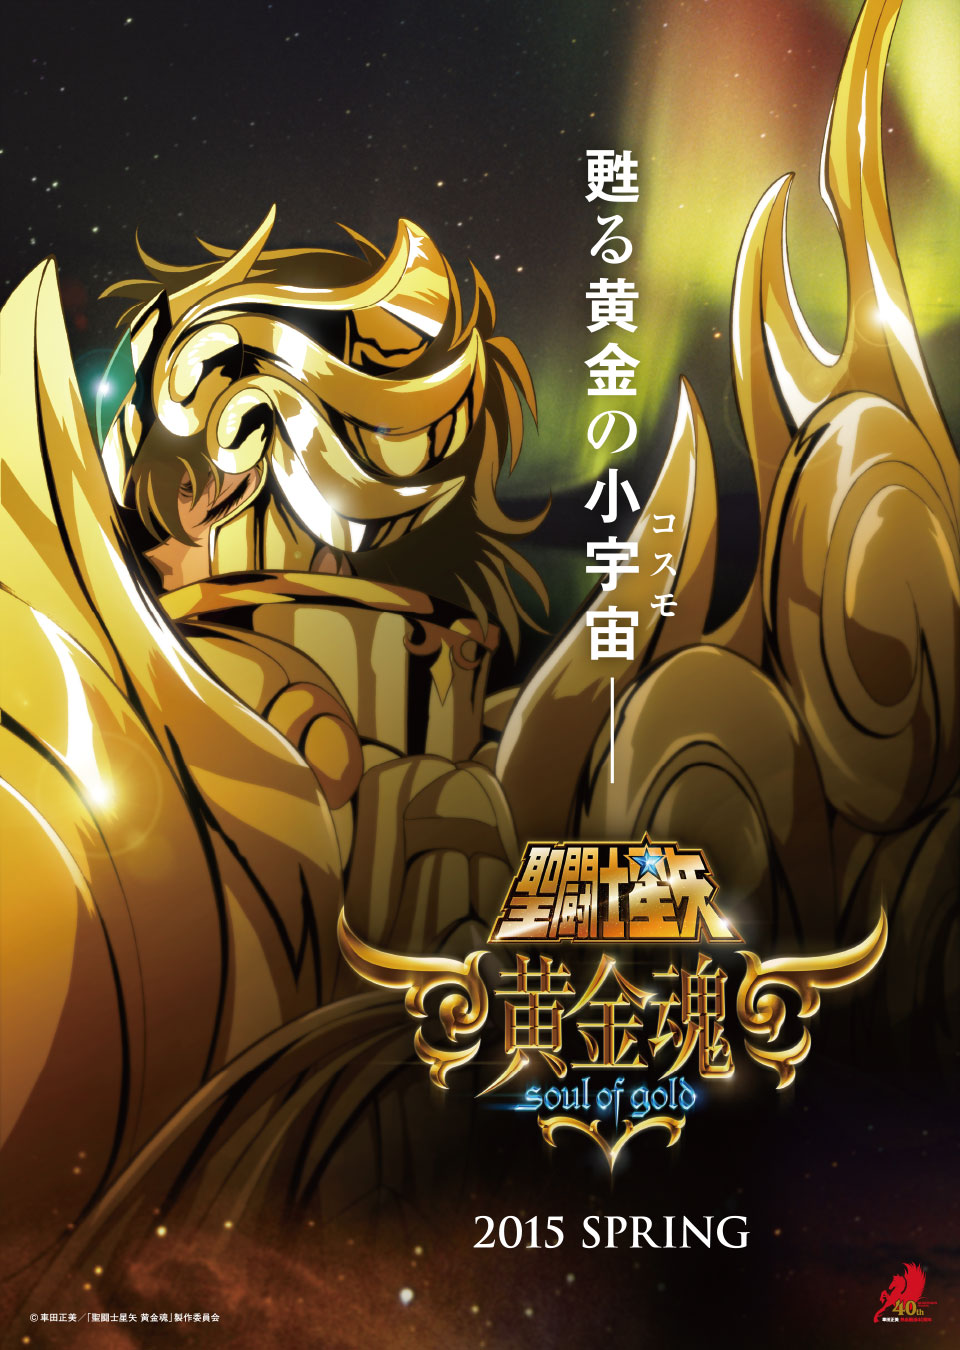 Saint Seiya Alfa: Confira os perfis dos personagens do mangá 'Gold